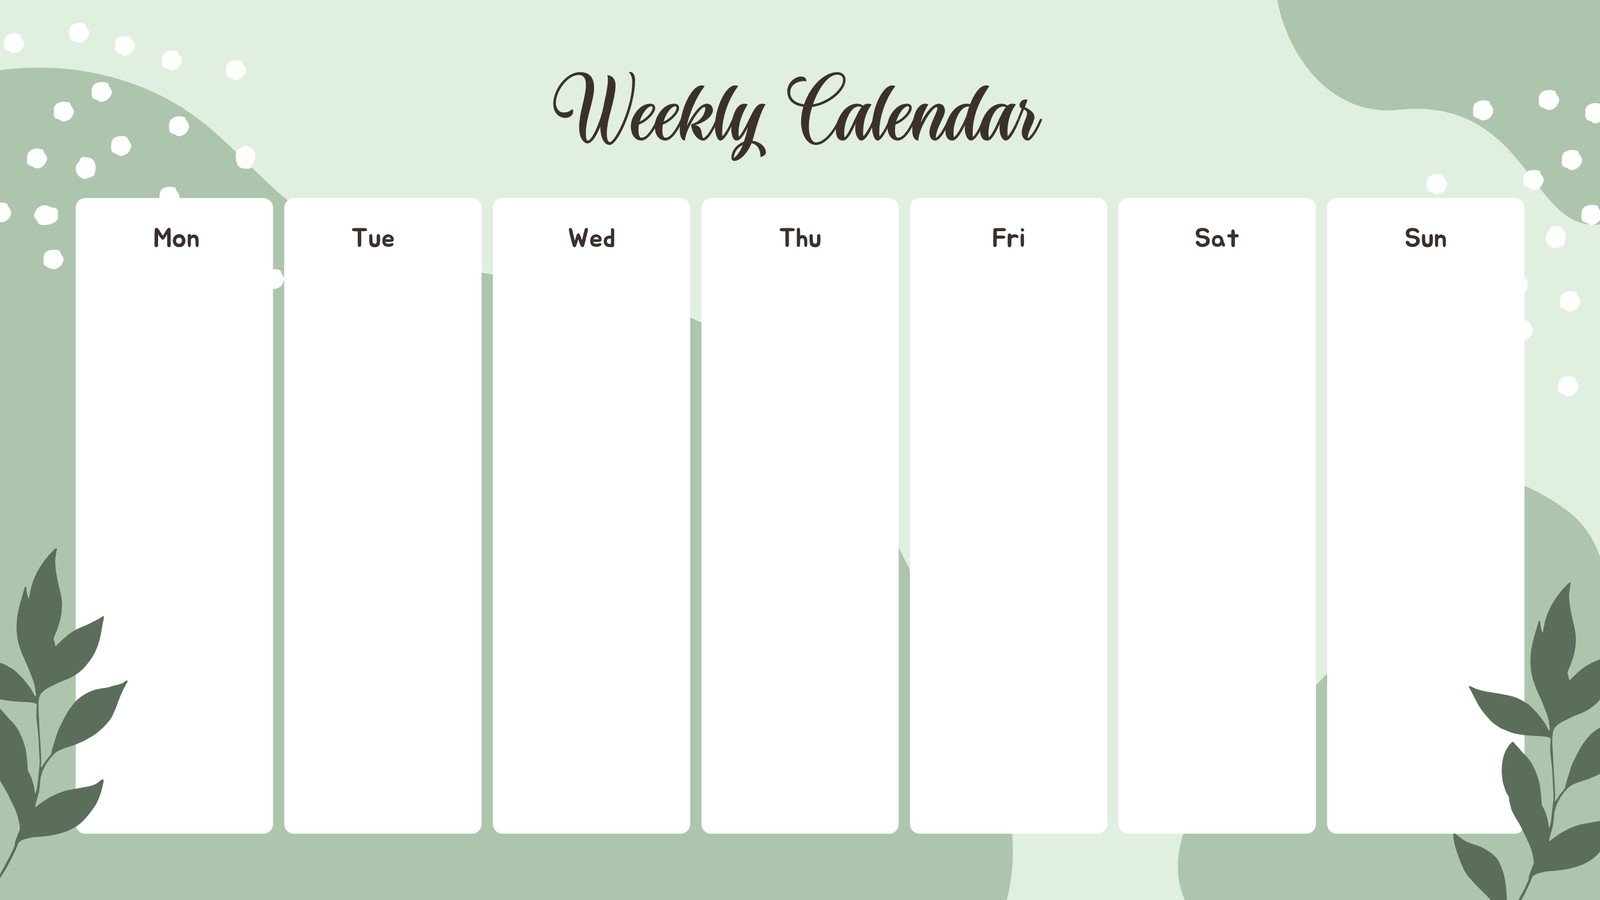 blank weekly calendar pdf